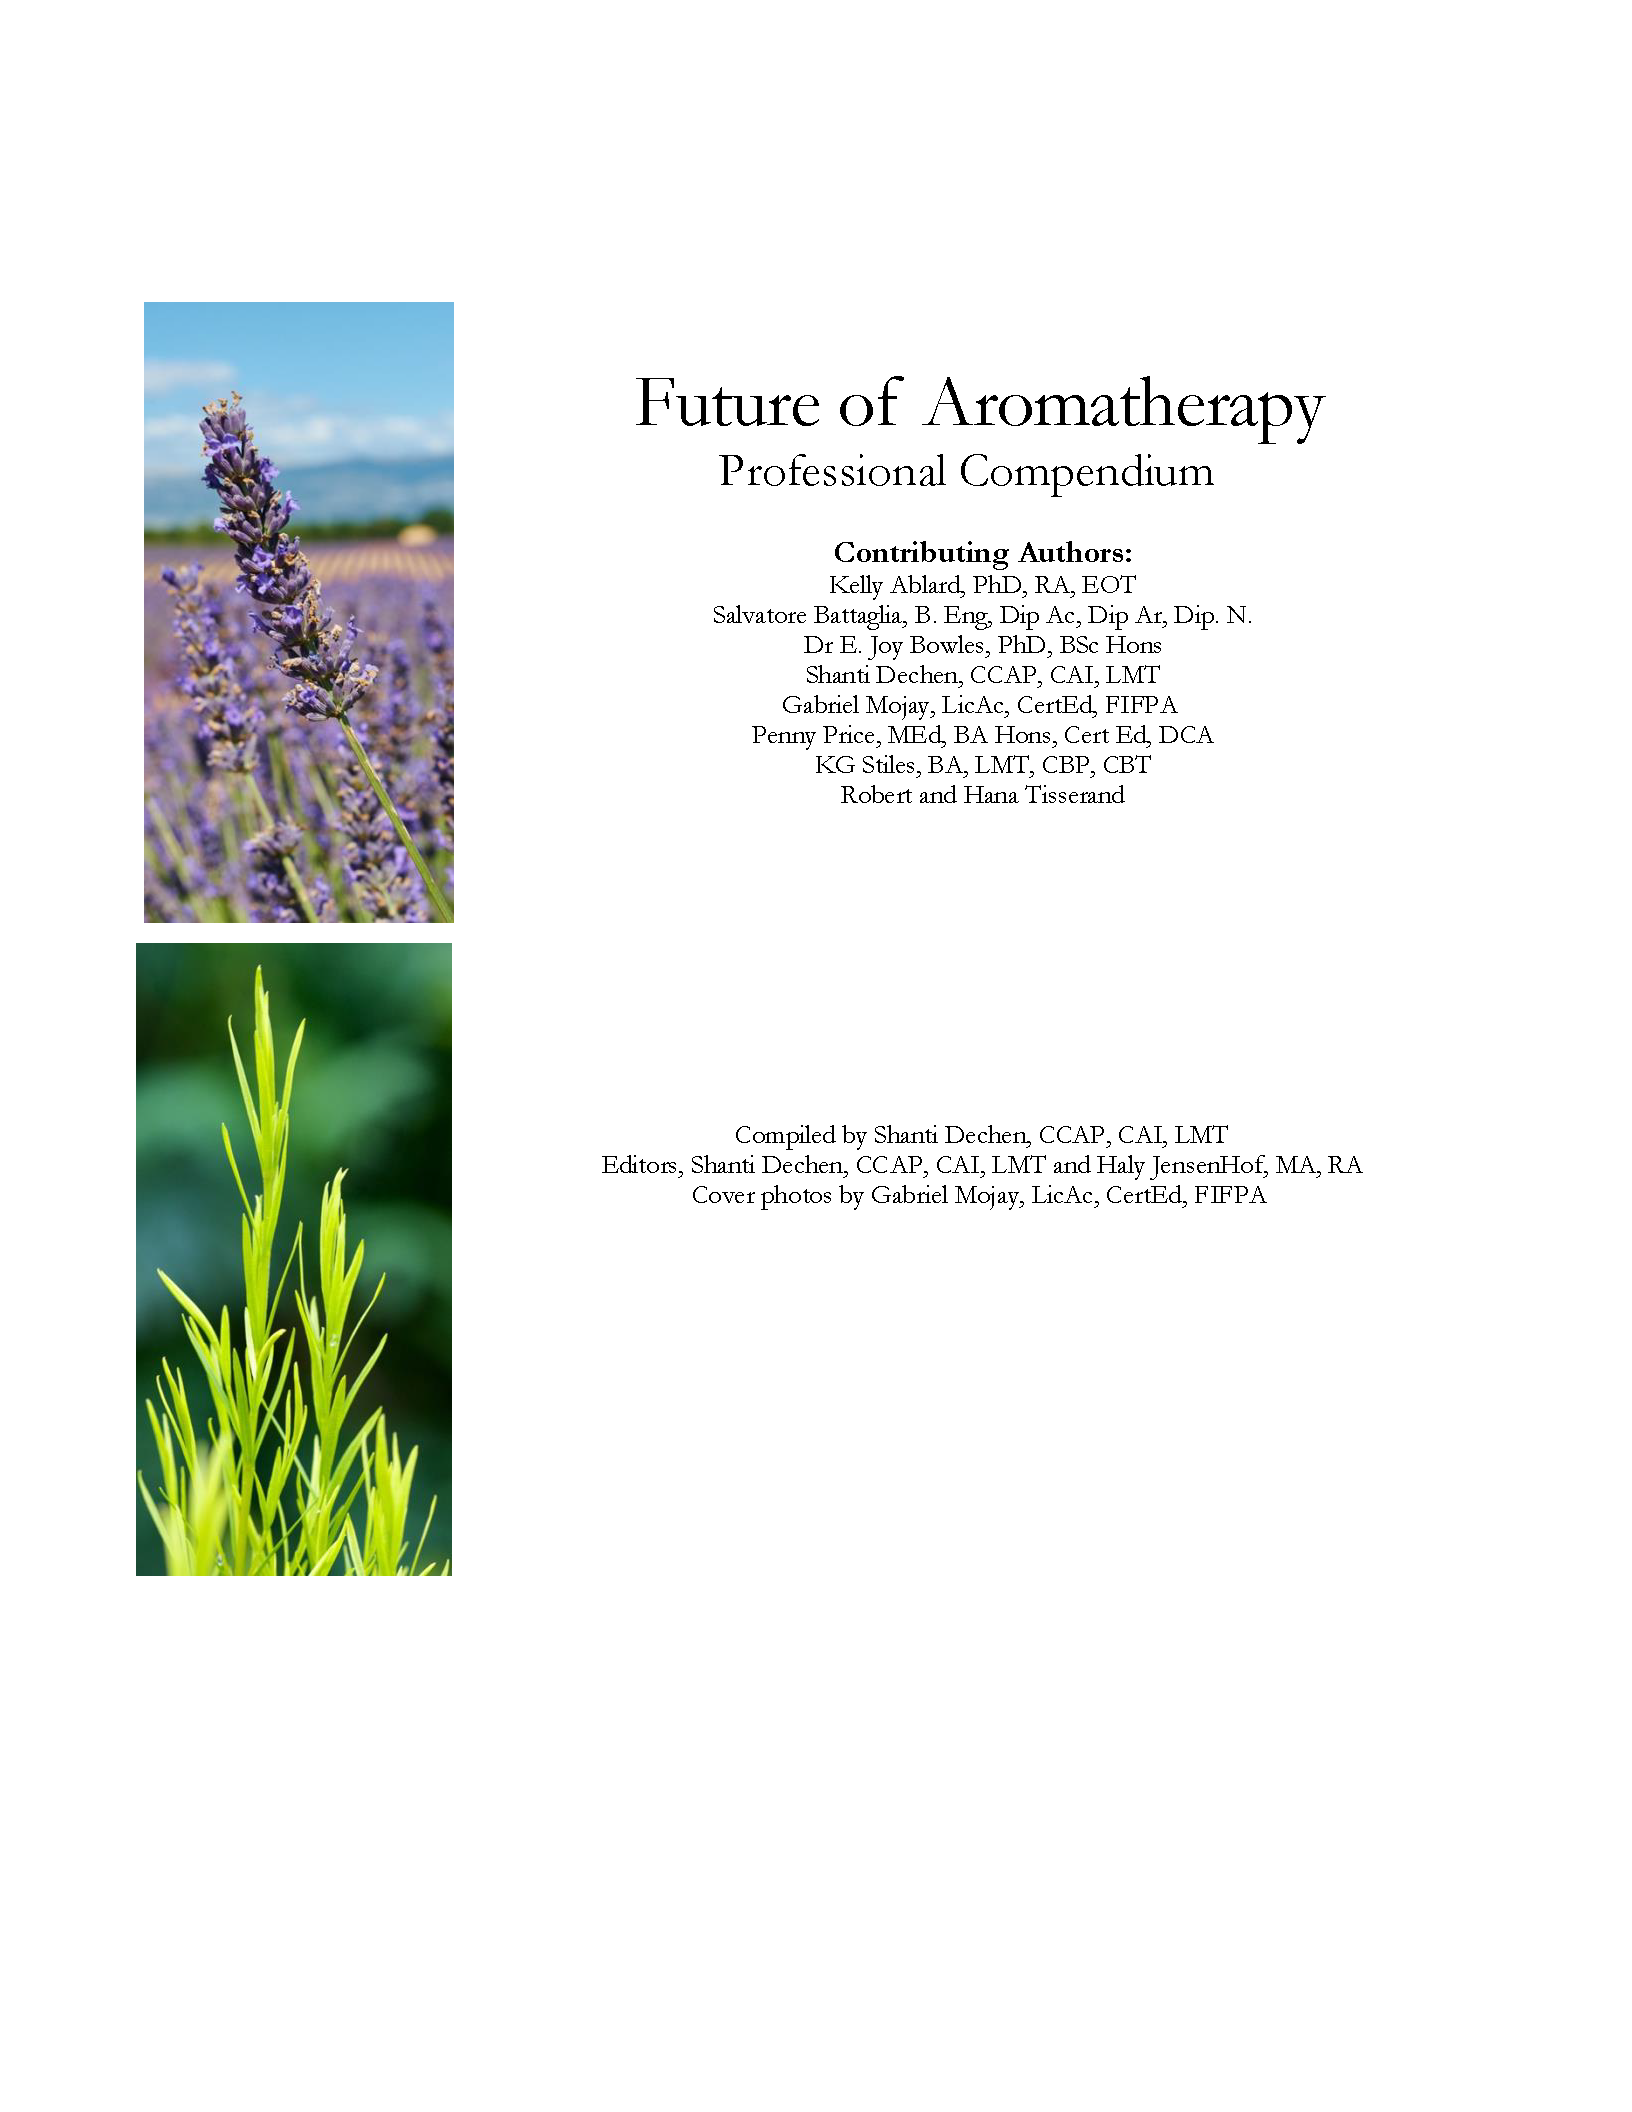 Future of Aromatherapy - Professional Compendium